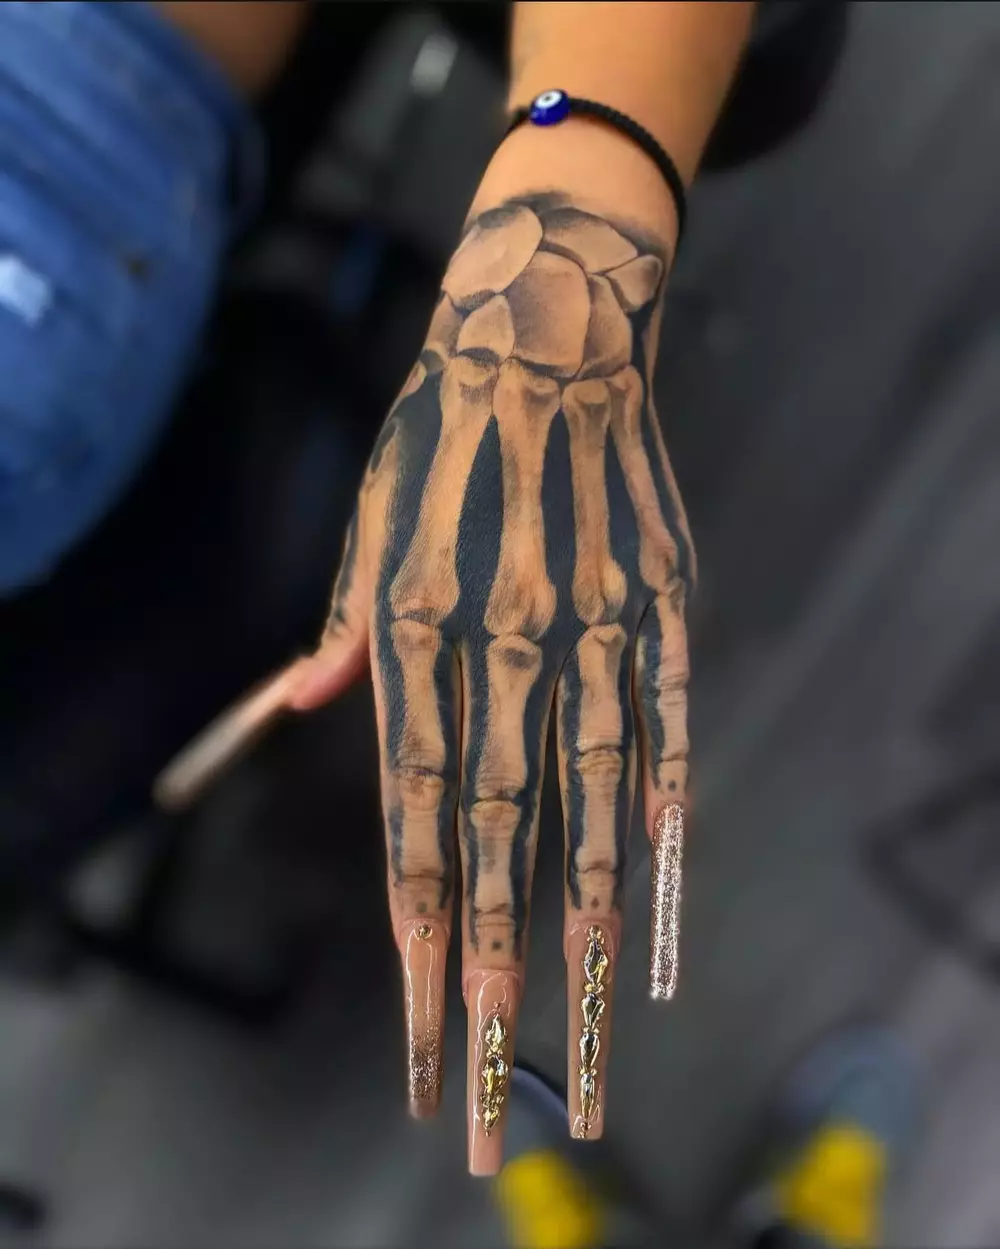 One More Female Skeleton Hand Tattoo 